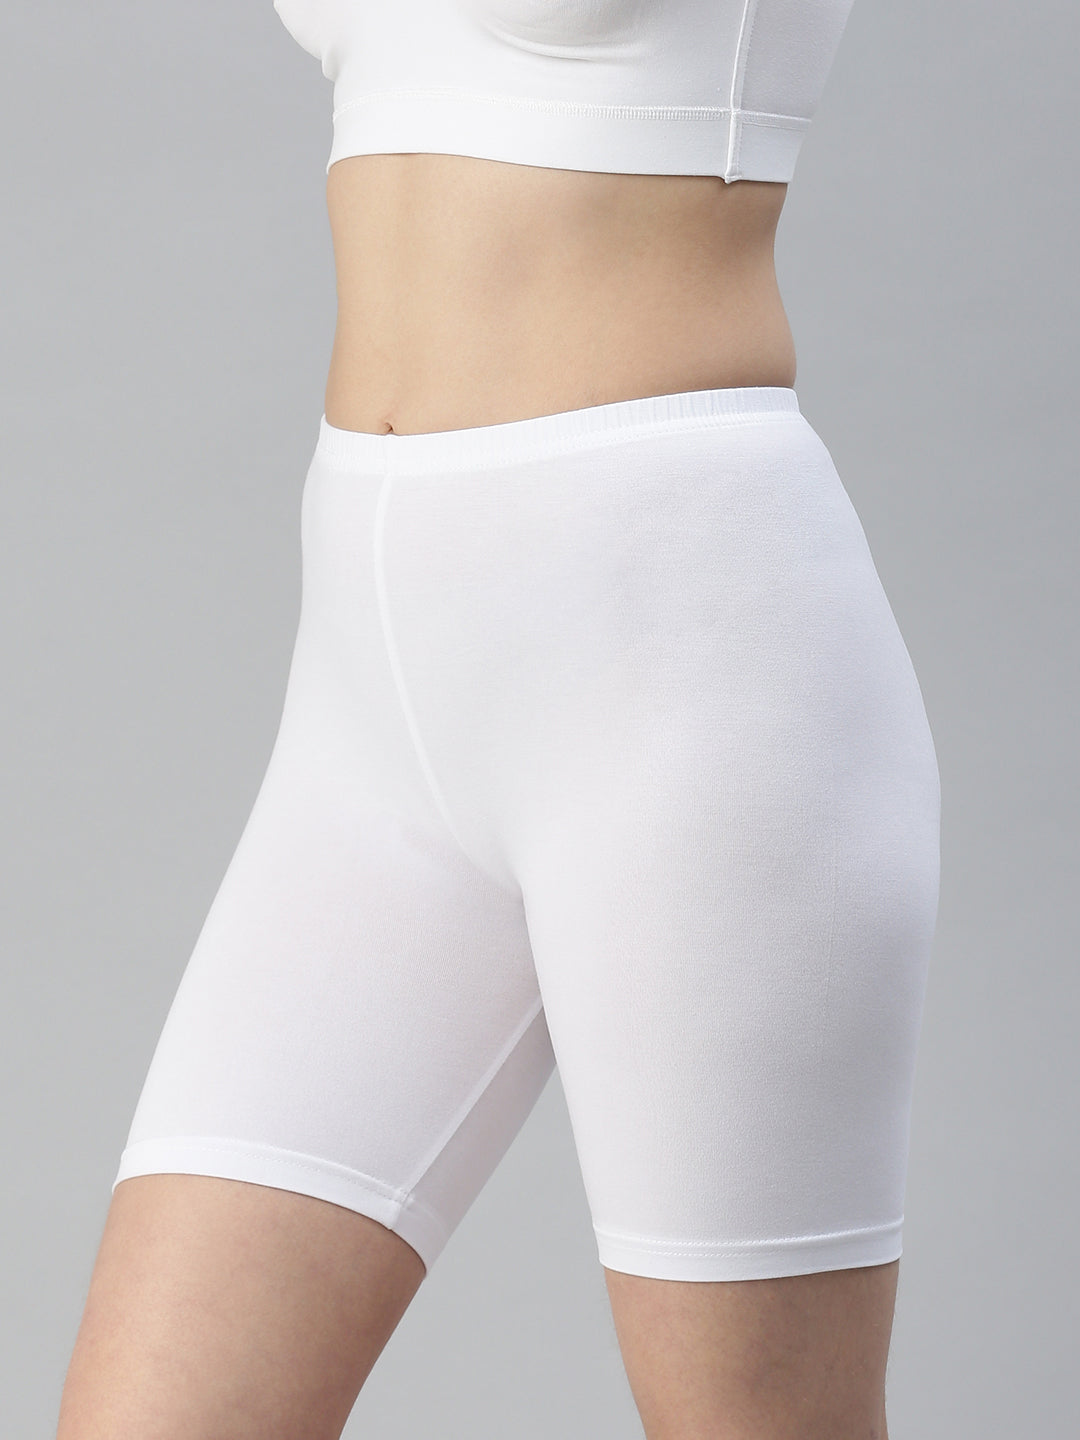 White yoga shorts for women